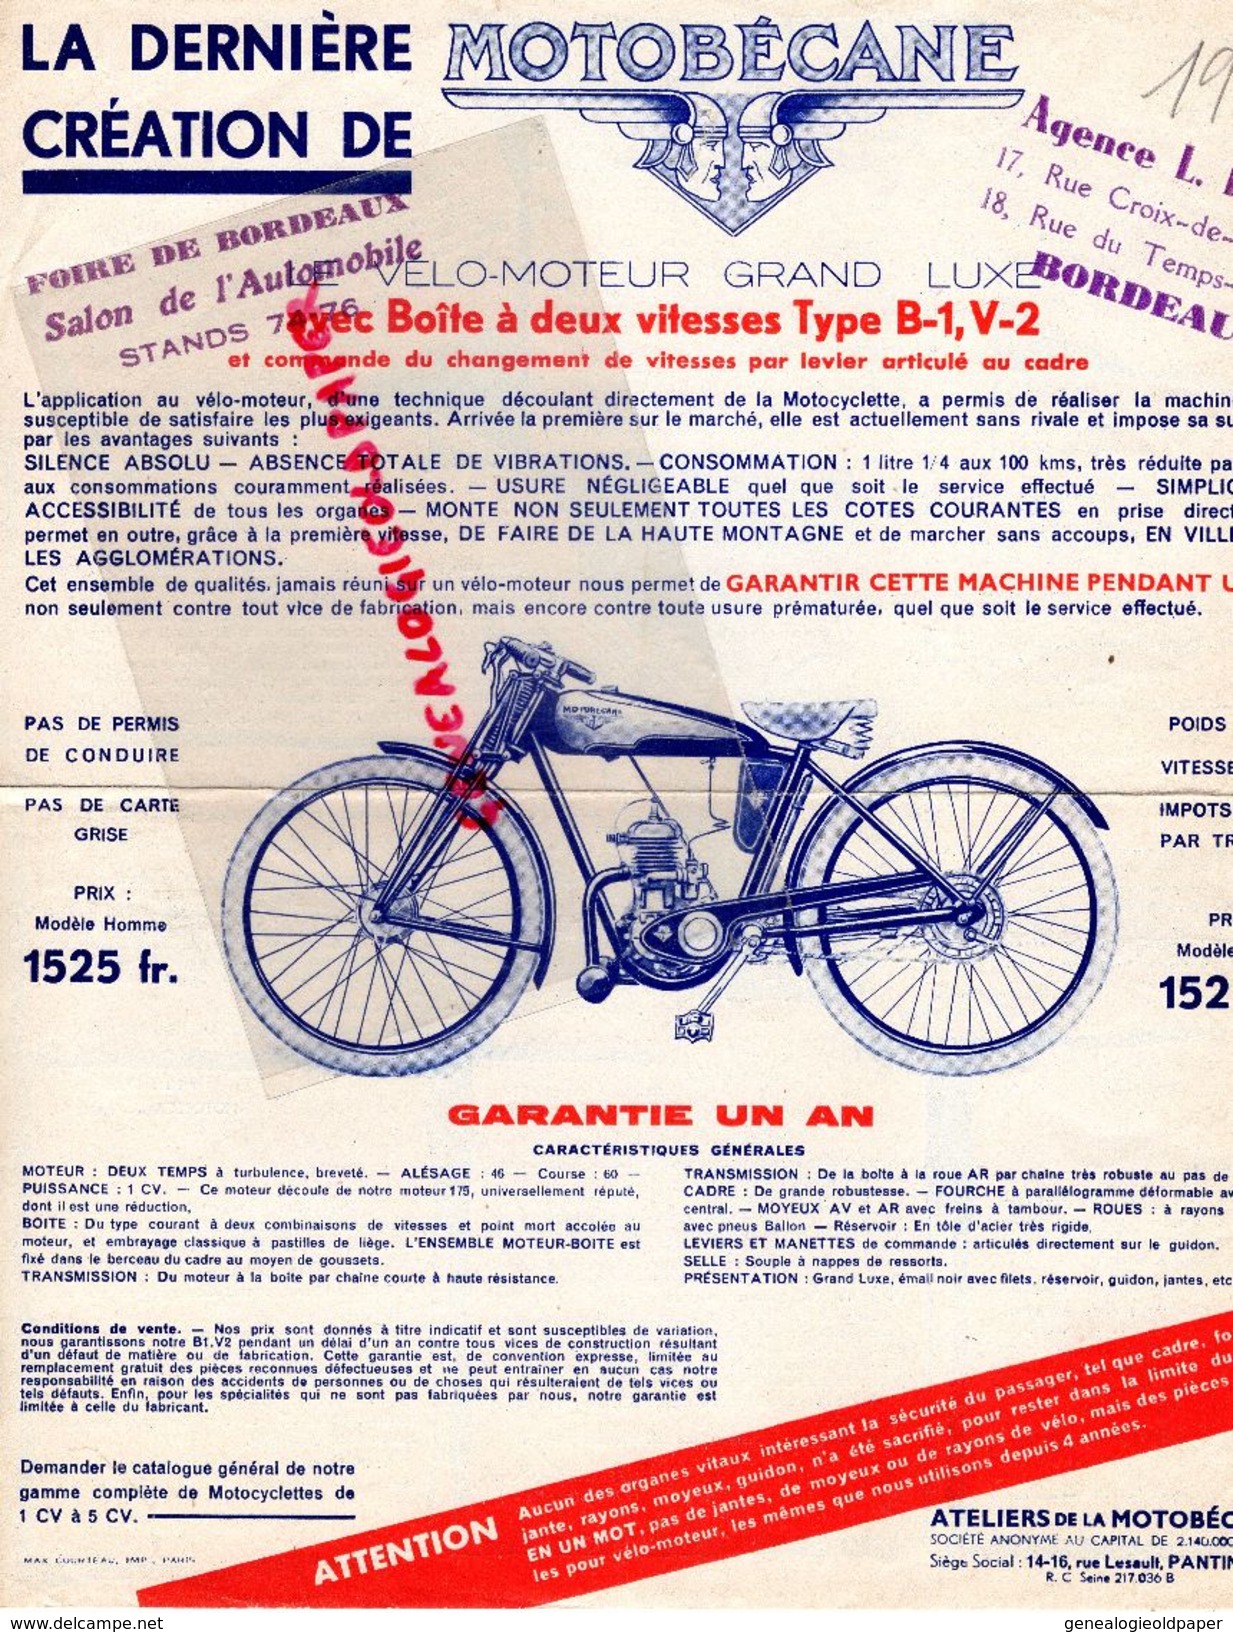 93- PANTIN-AGENCE BORDEAUX L. DELERME- FOIRE SALON AUTOMOBILE- MOTOBECANE VELO MOTEUR GRAND LUXE TYPE B1 V2-MOTO-1934 - Transports